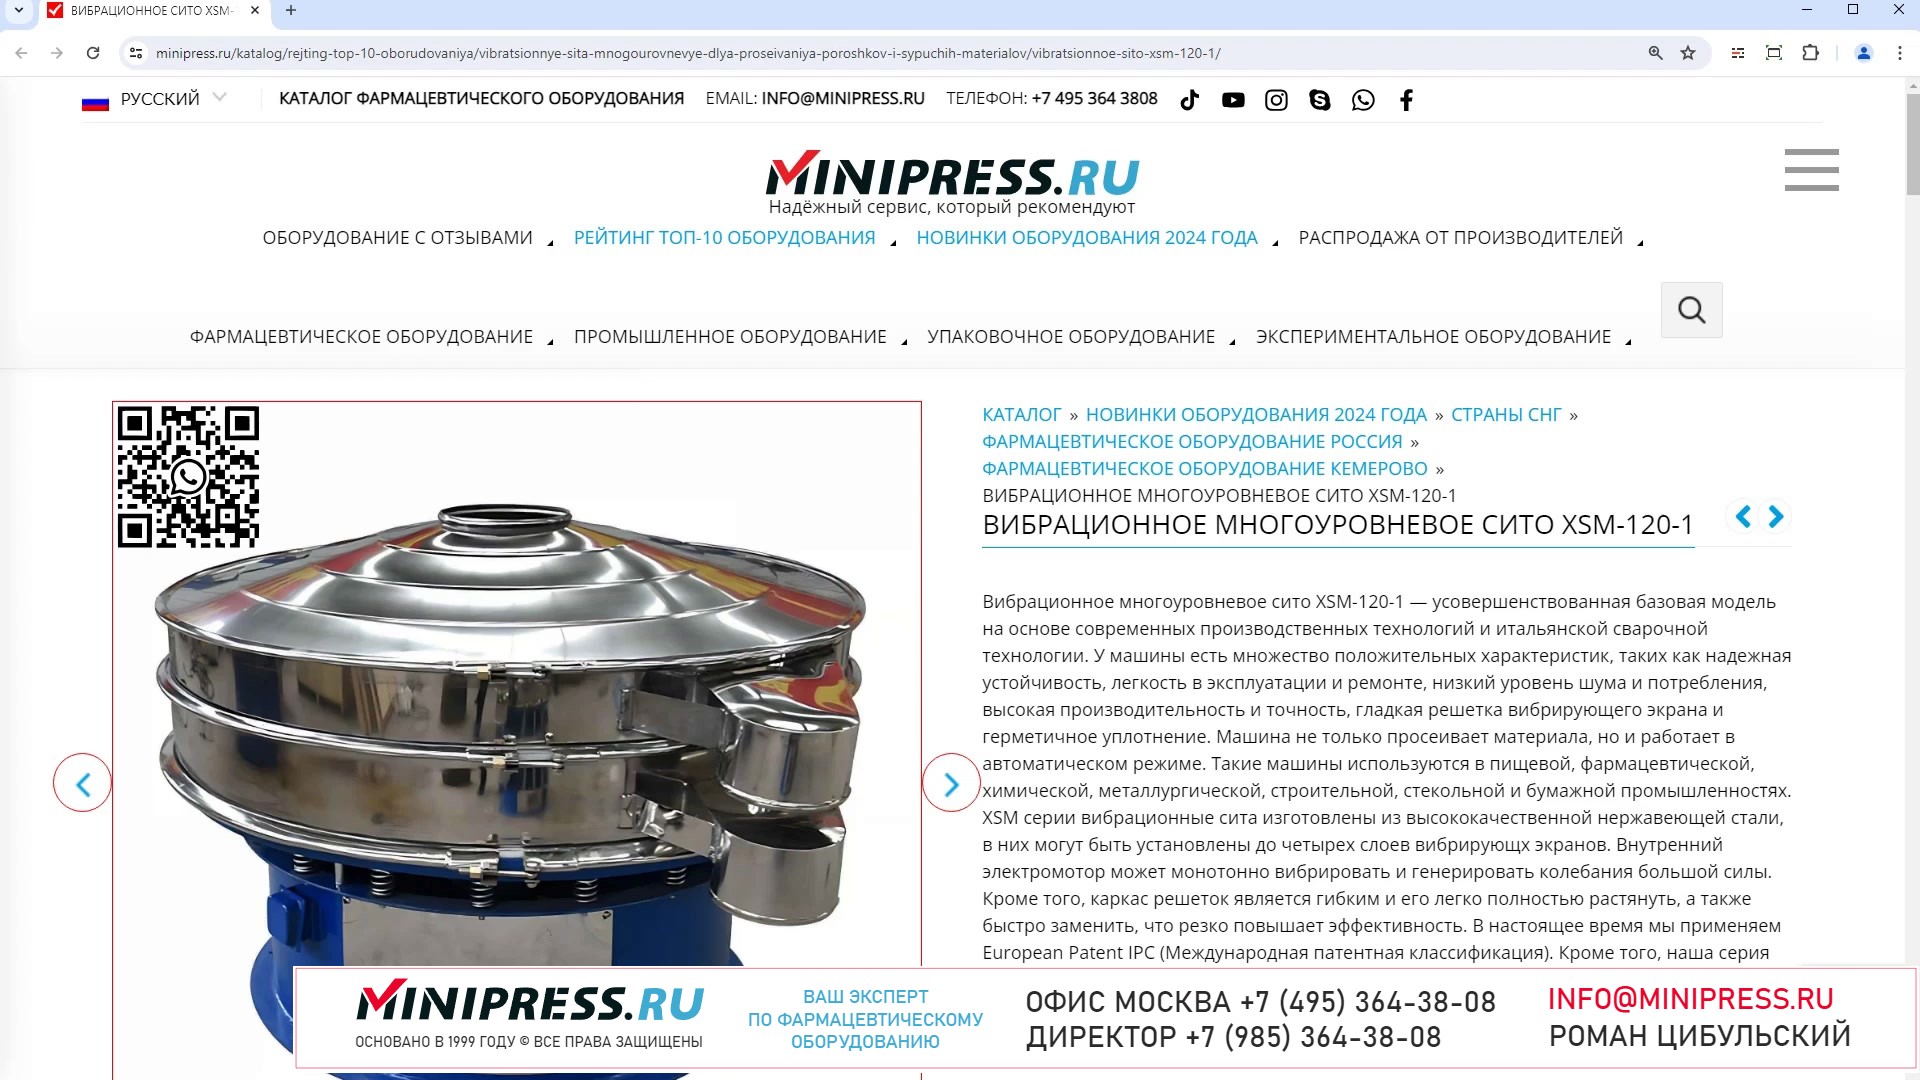 Minipress.ru Вибрационное многоуровневое сито XSM-120-1